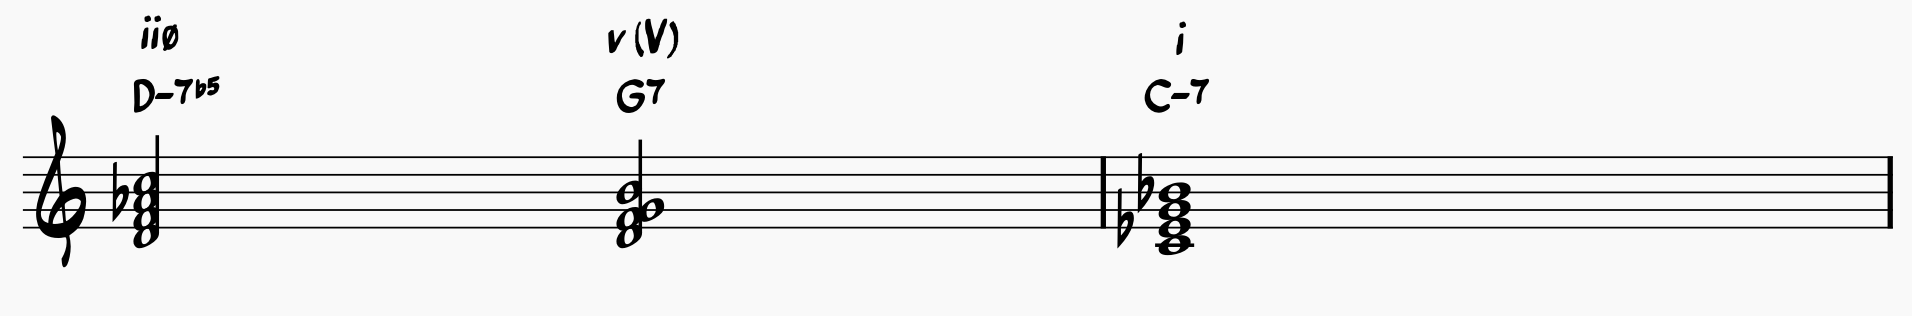 short chord progression: minor ii-V-i chord progression in C-